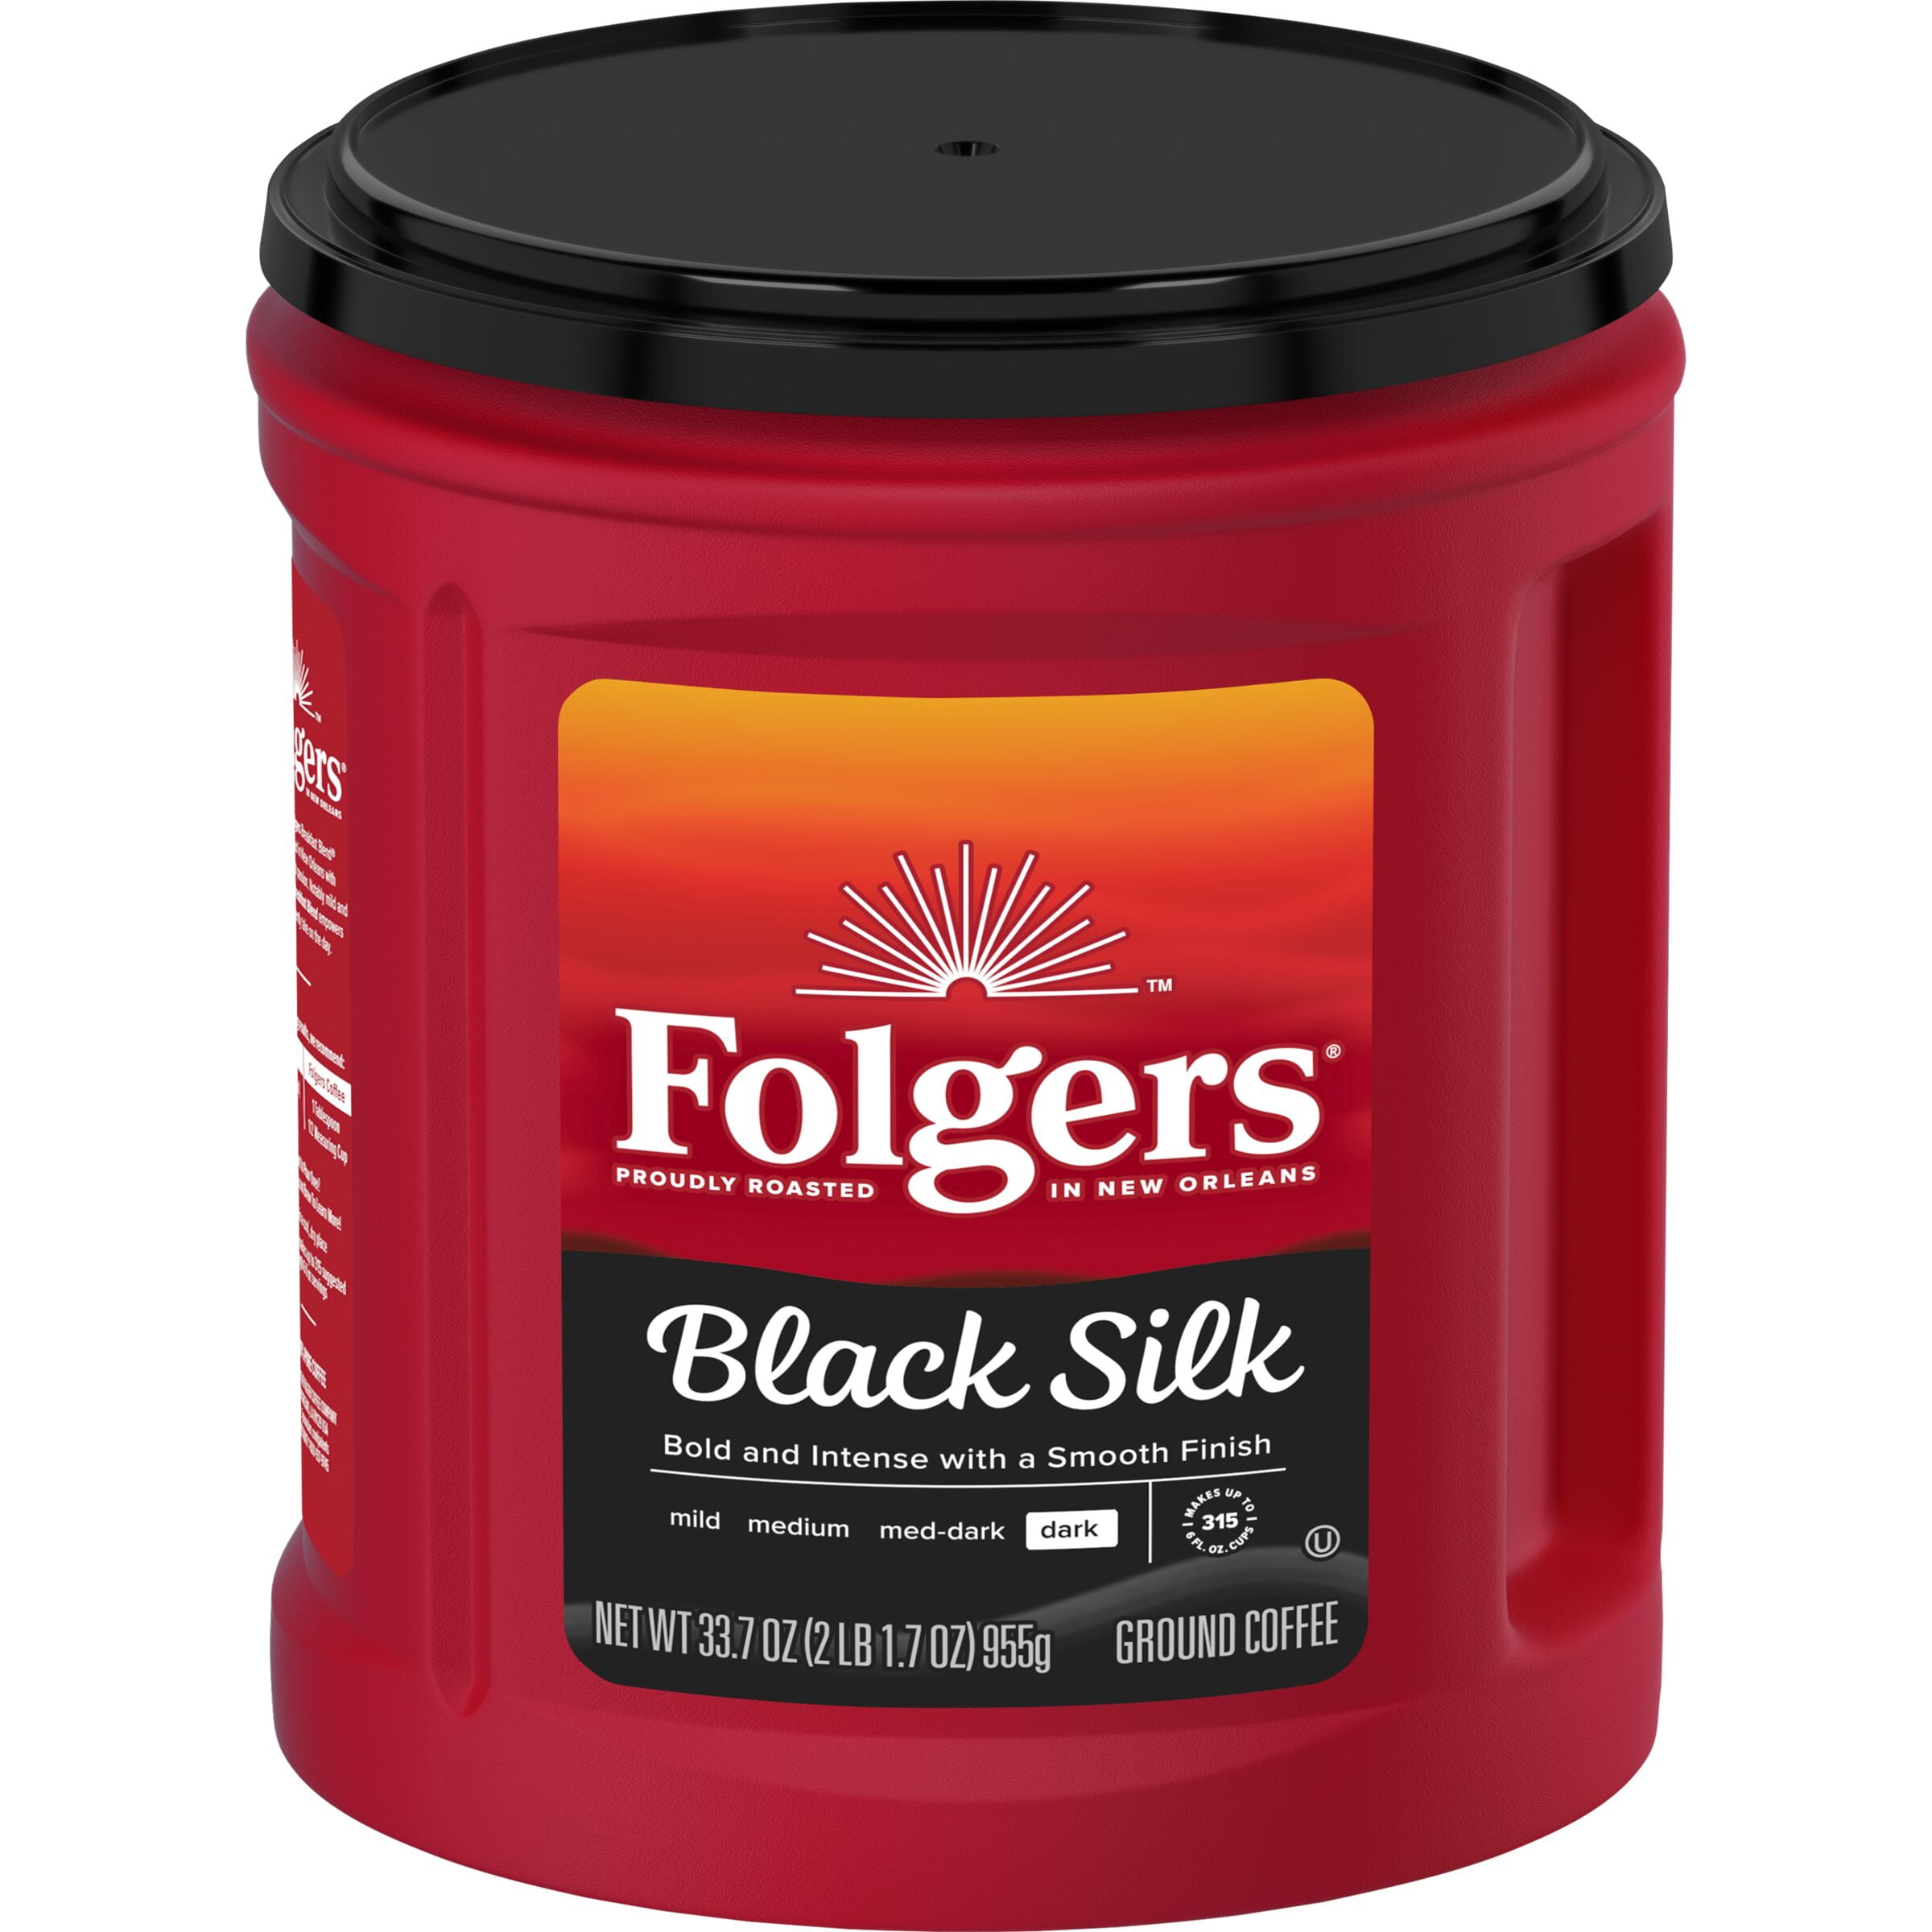 Folgers Black Silk Ground Coffee, Smooth Dark Roast Coffee, 33.7Ounce Canister